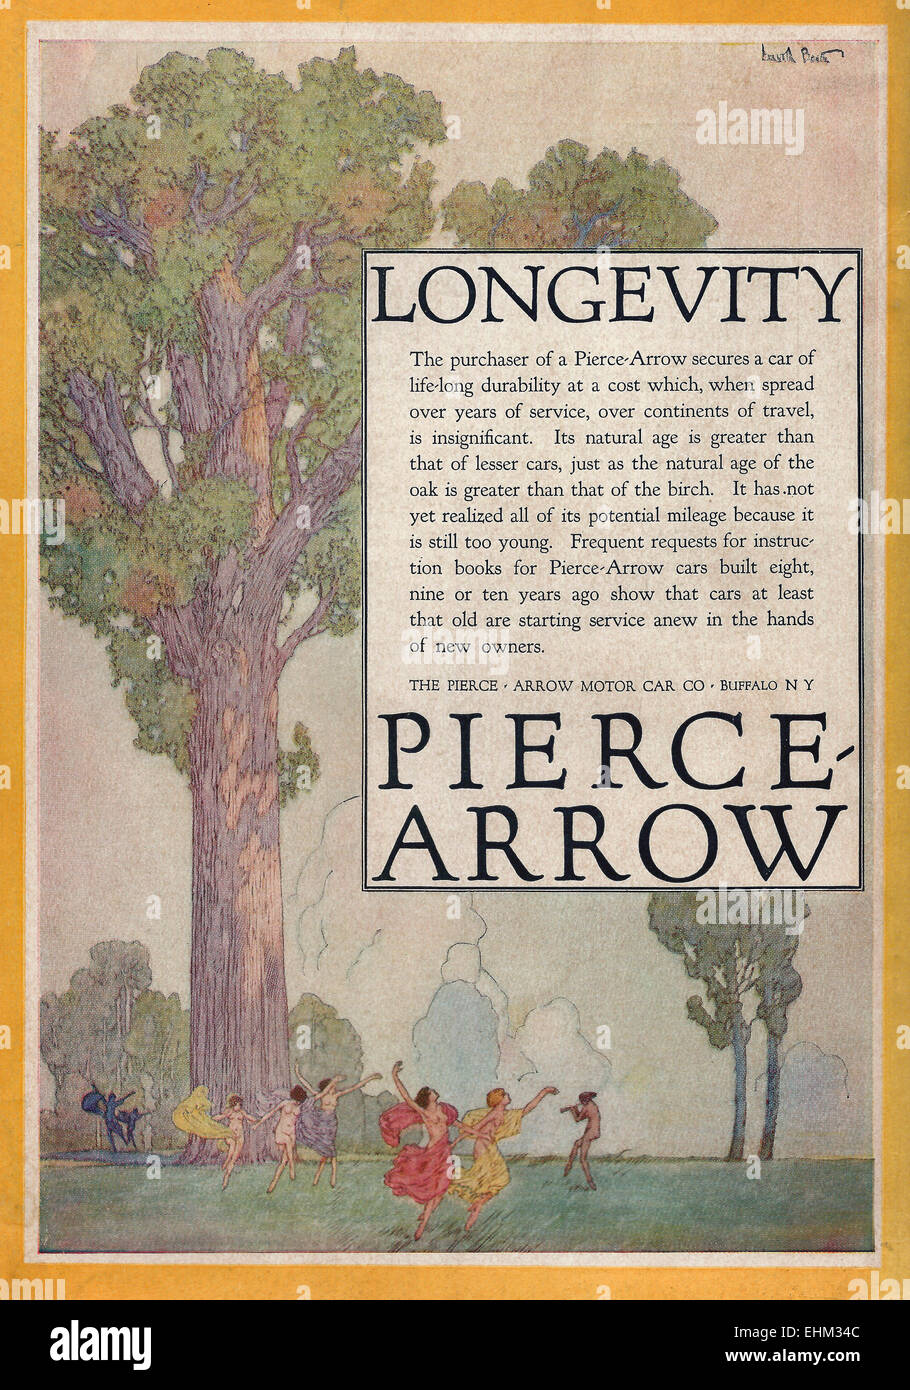 Pierce Arrow Advertisement - Longevity - 1916 Stock Photo